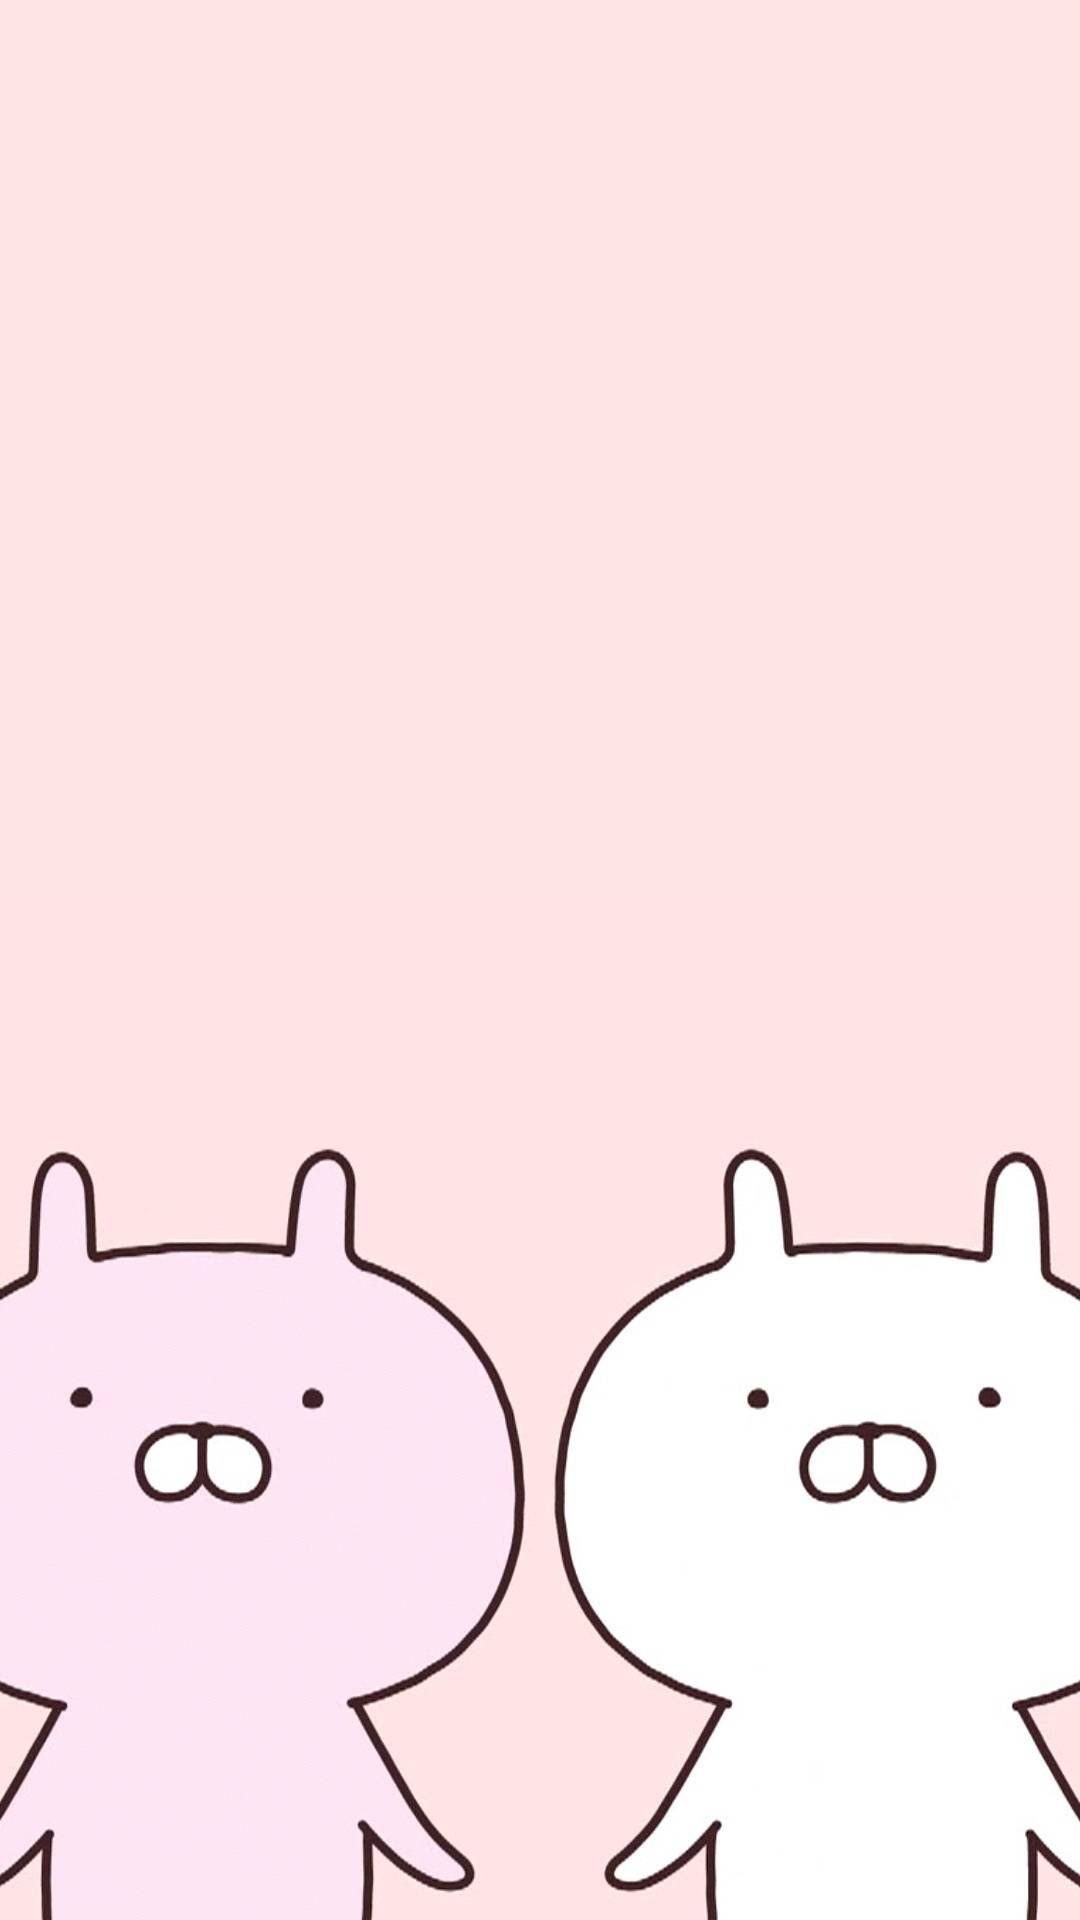 Cute Rabbit Illustration Iphone Wallpapers